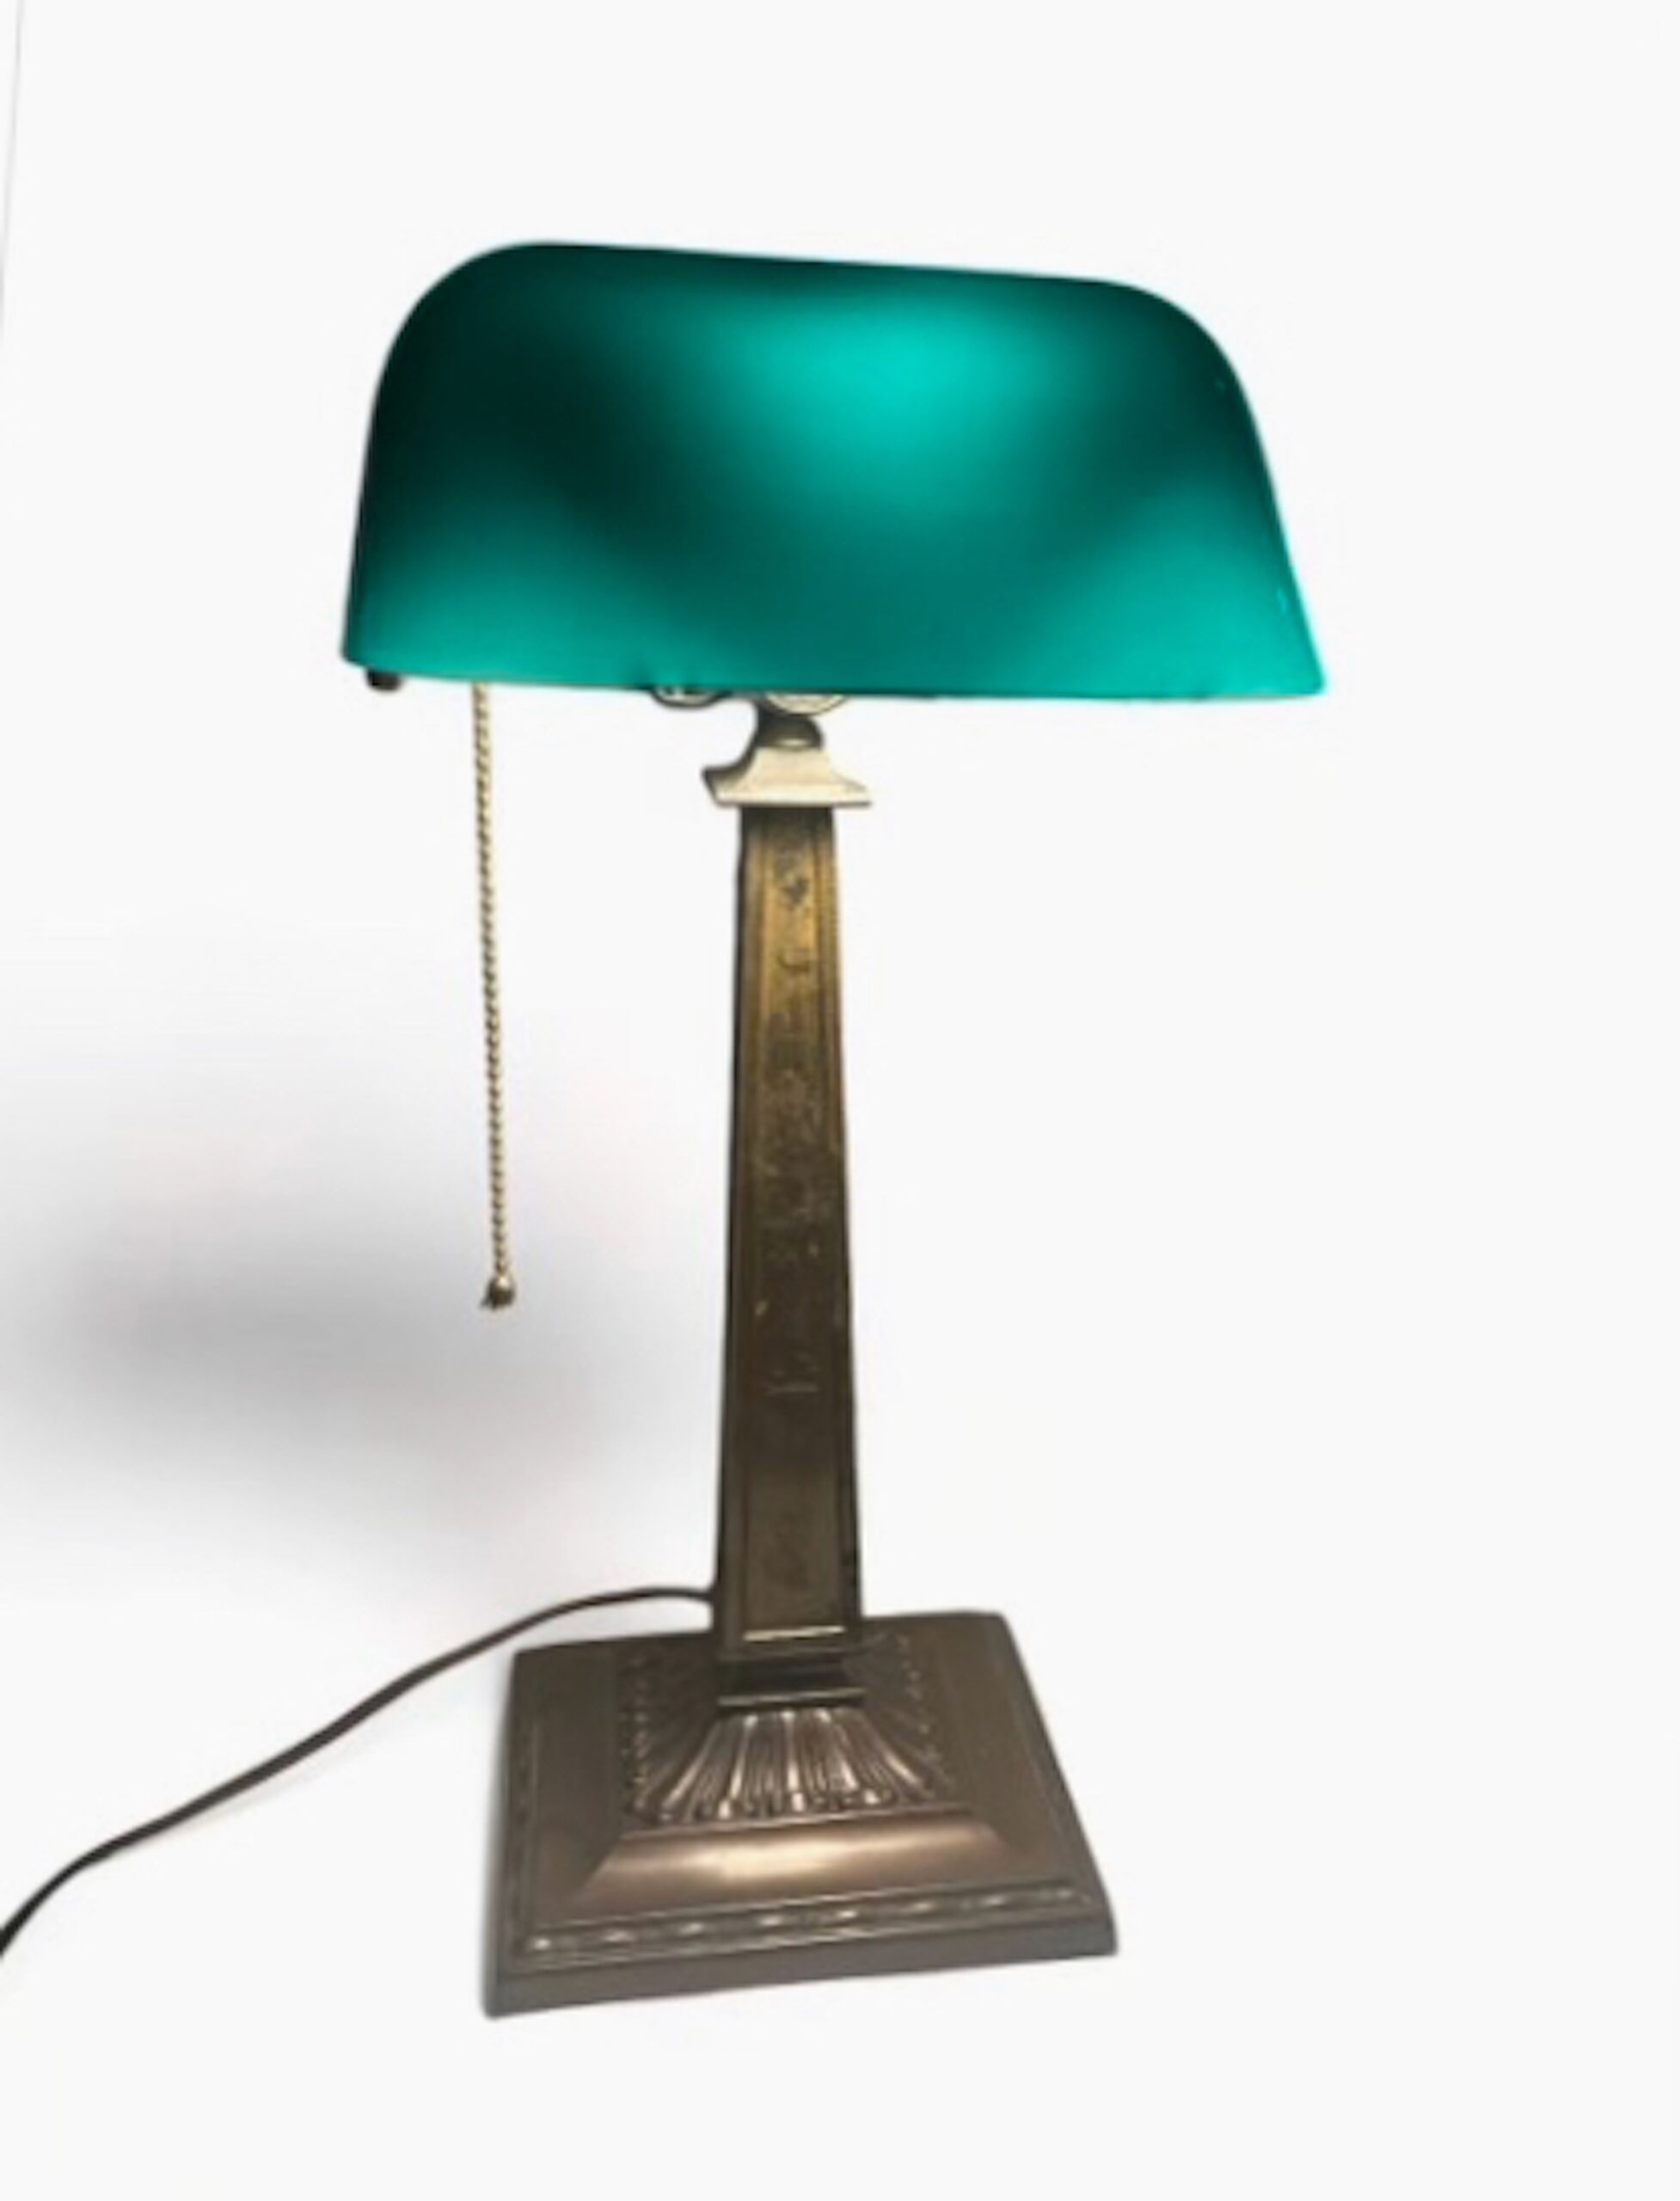 Emeralite, Adjustable Bankers Desk Lamp, c. 1917